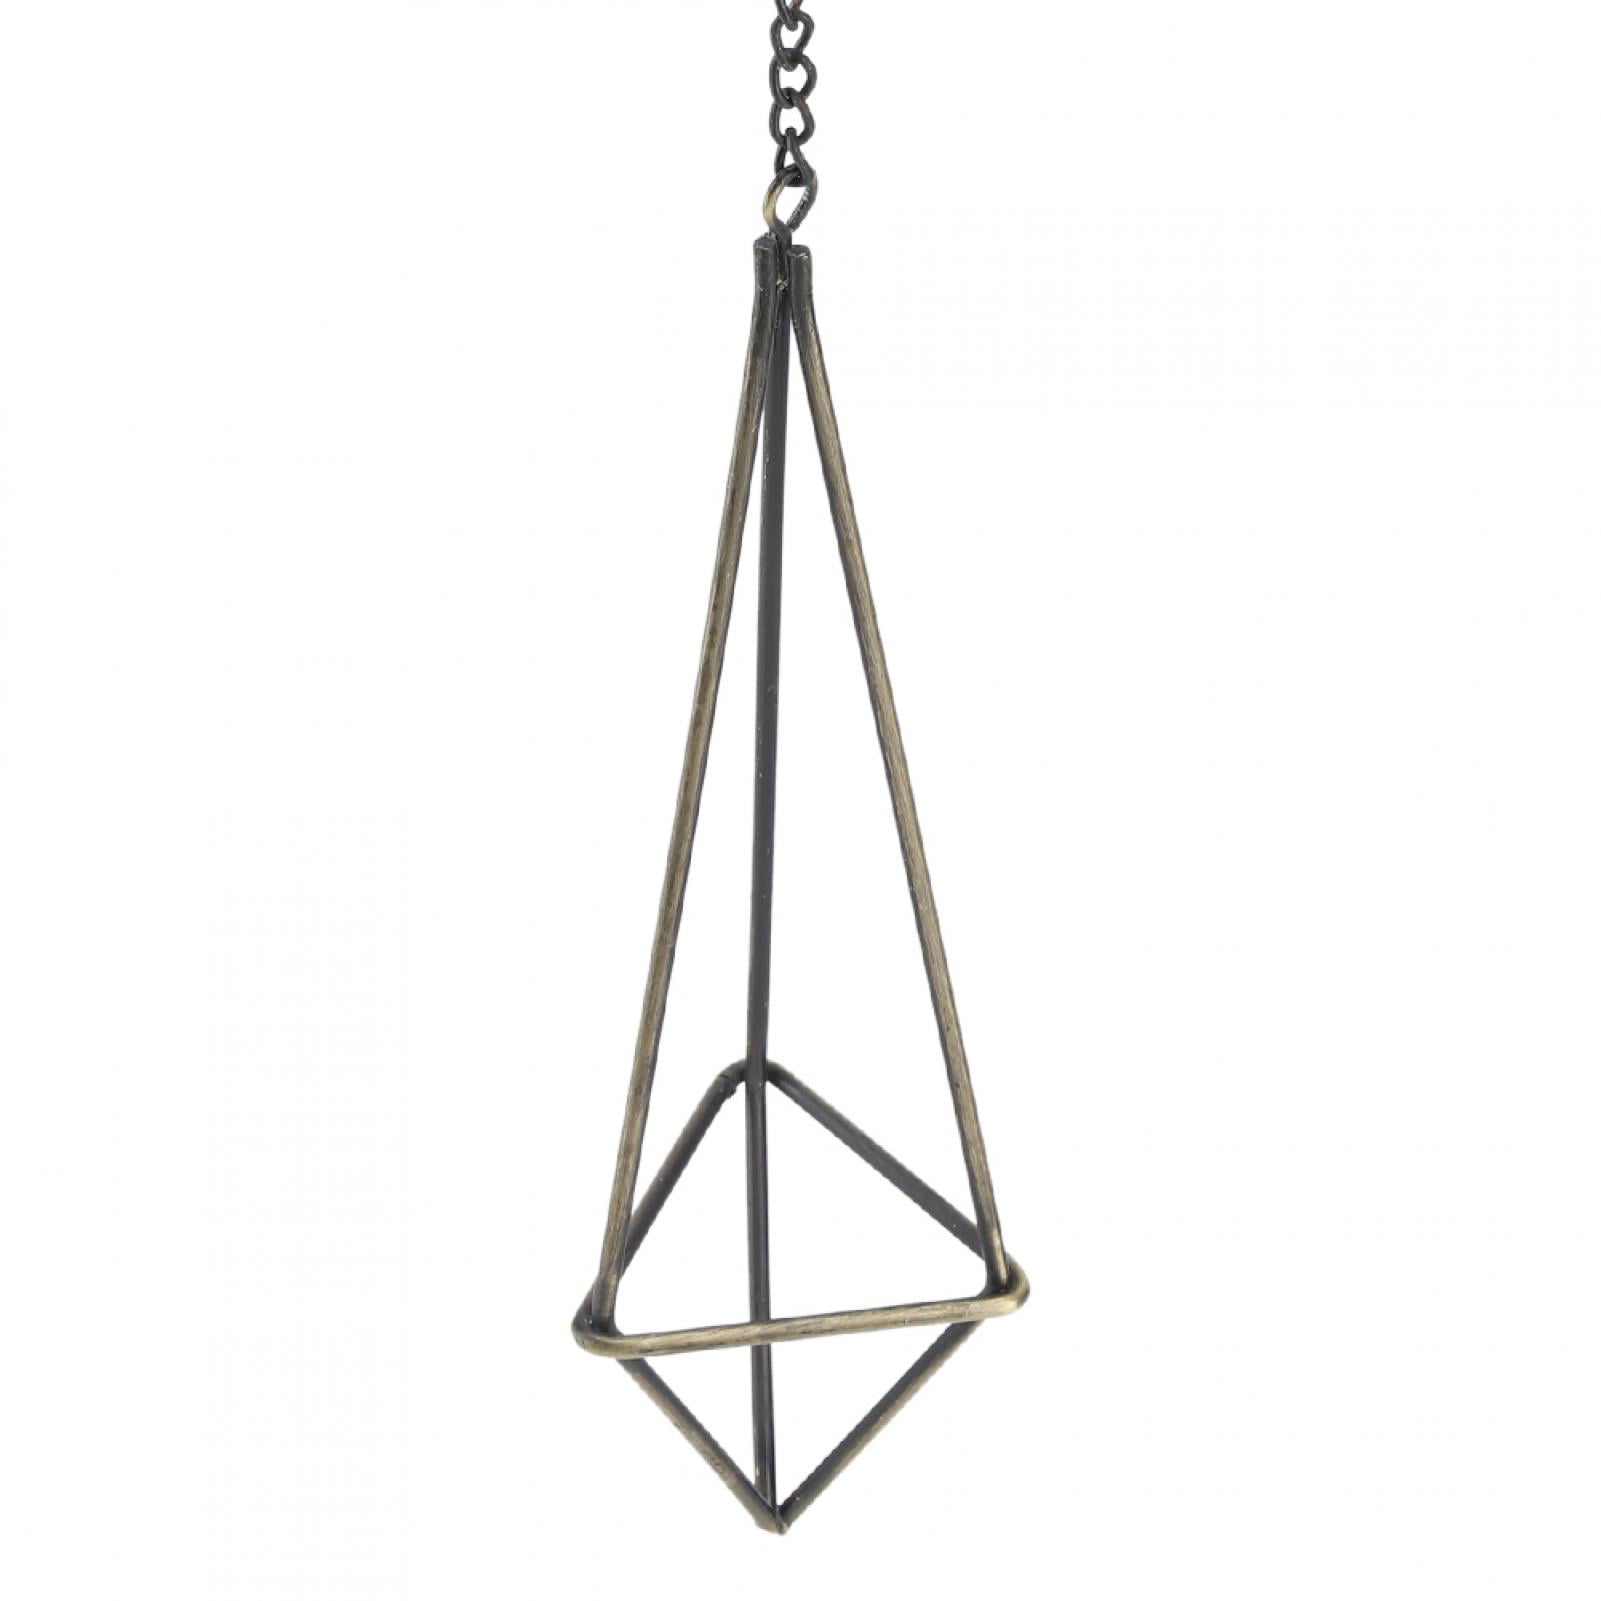 Geometric Triangle Hanging Flower Holder Stand Elegant Air Plant Rack 